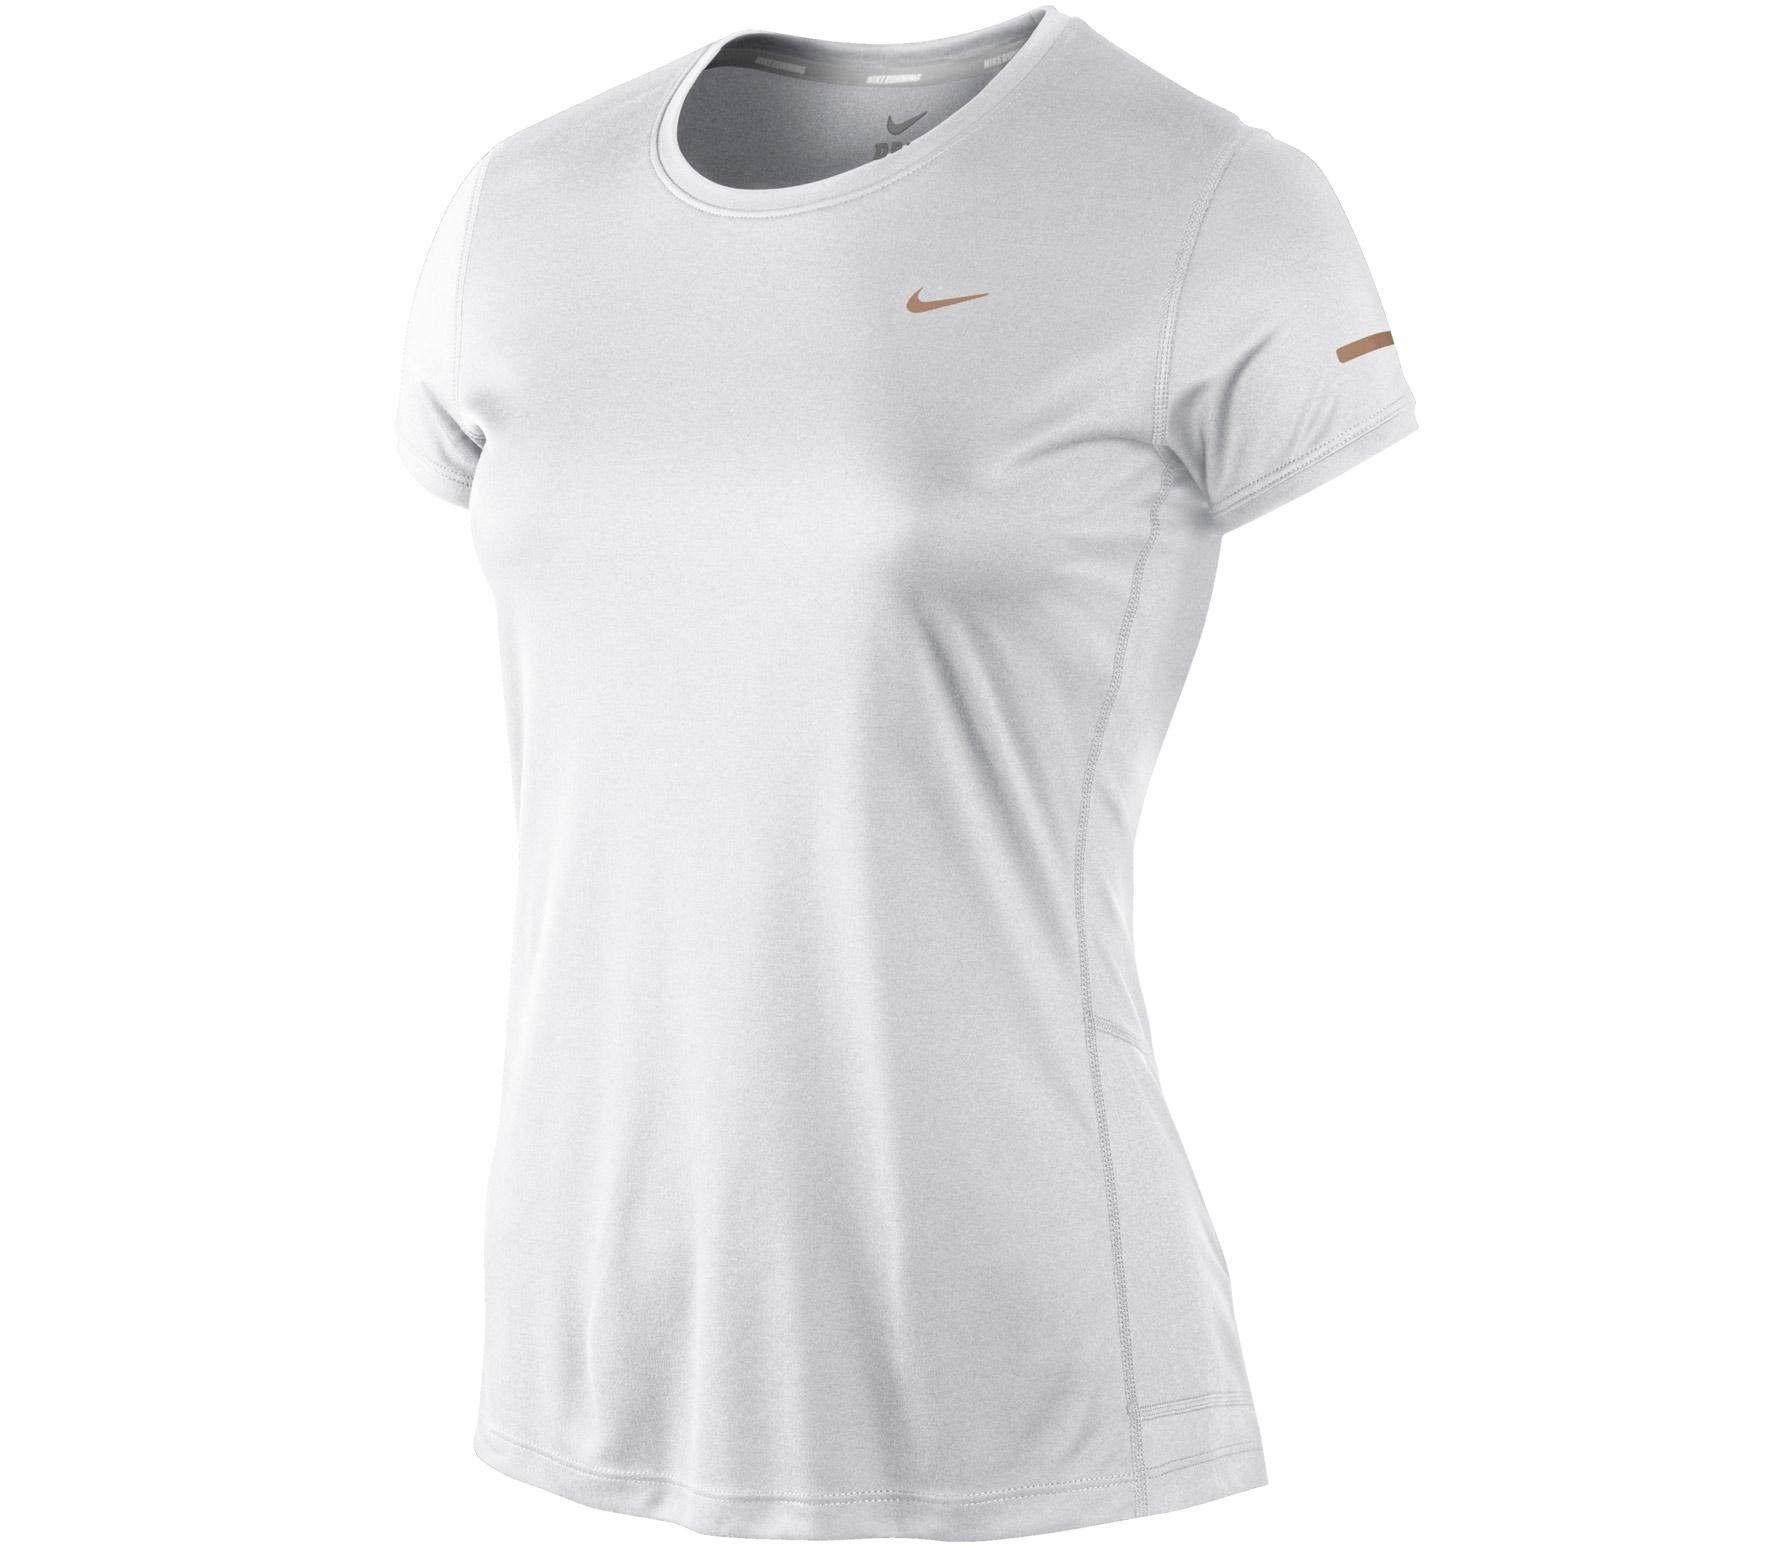 Foto Nike - Camiseta Mujer Nike Miler SS - SU13 foto 431337